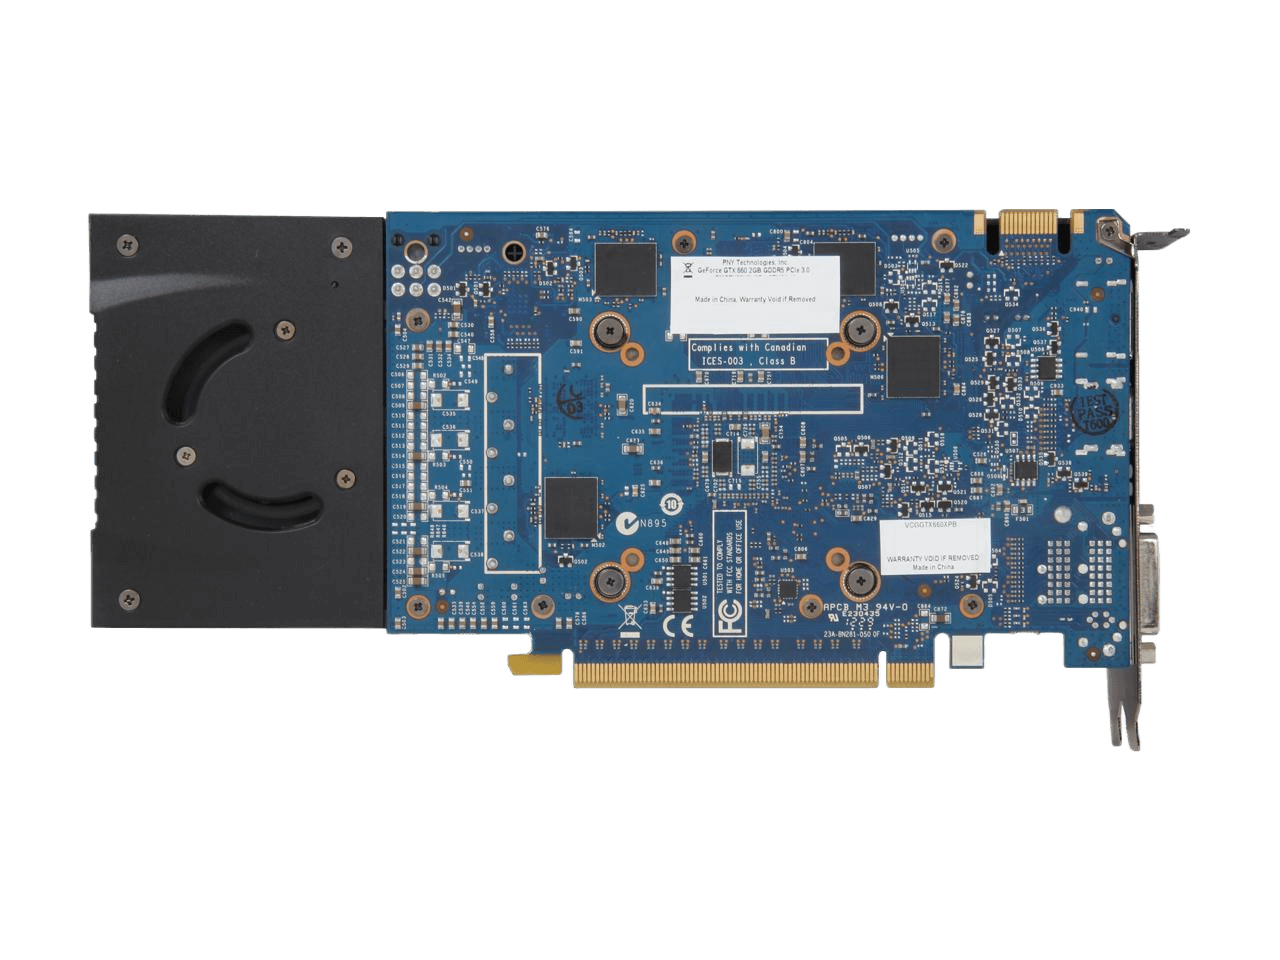 PNY G-SYNC Support GeForce GTX 660 2GB 192-Bit GDDR5 PCI Express 3.0 x16 HDCP Ready SLI Support Video Card VCGGTX660XPB